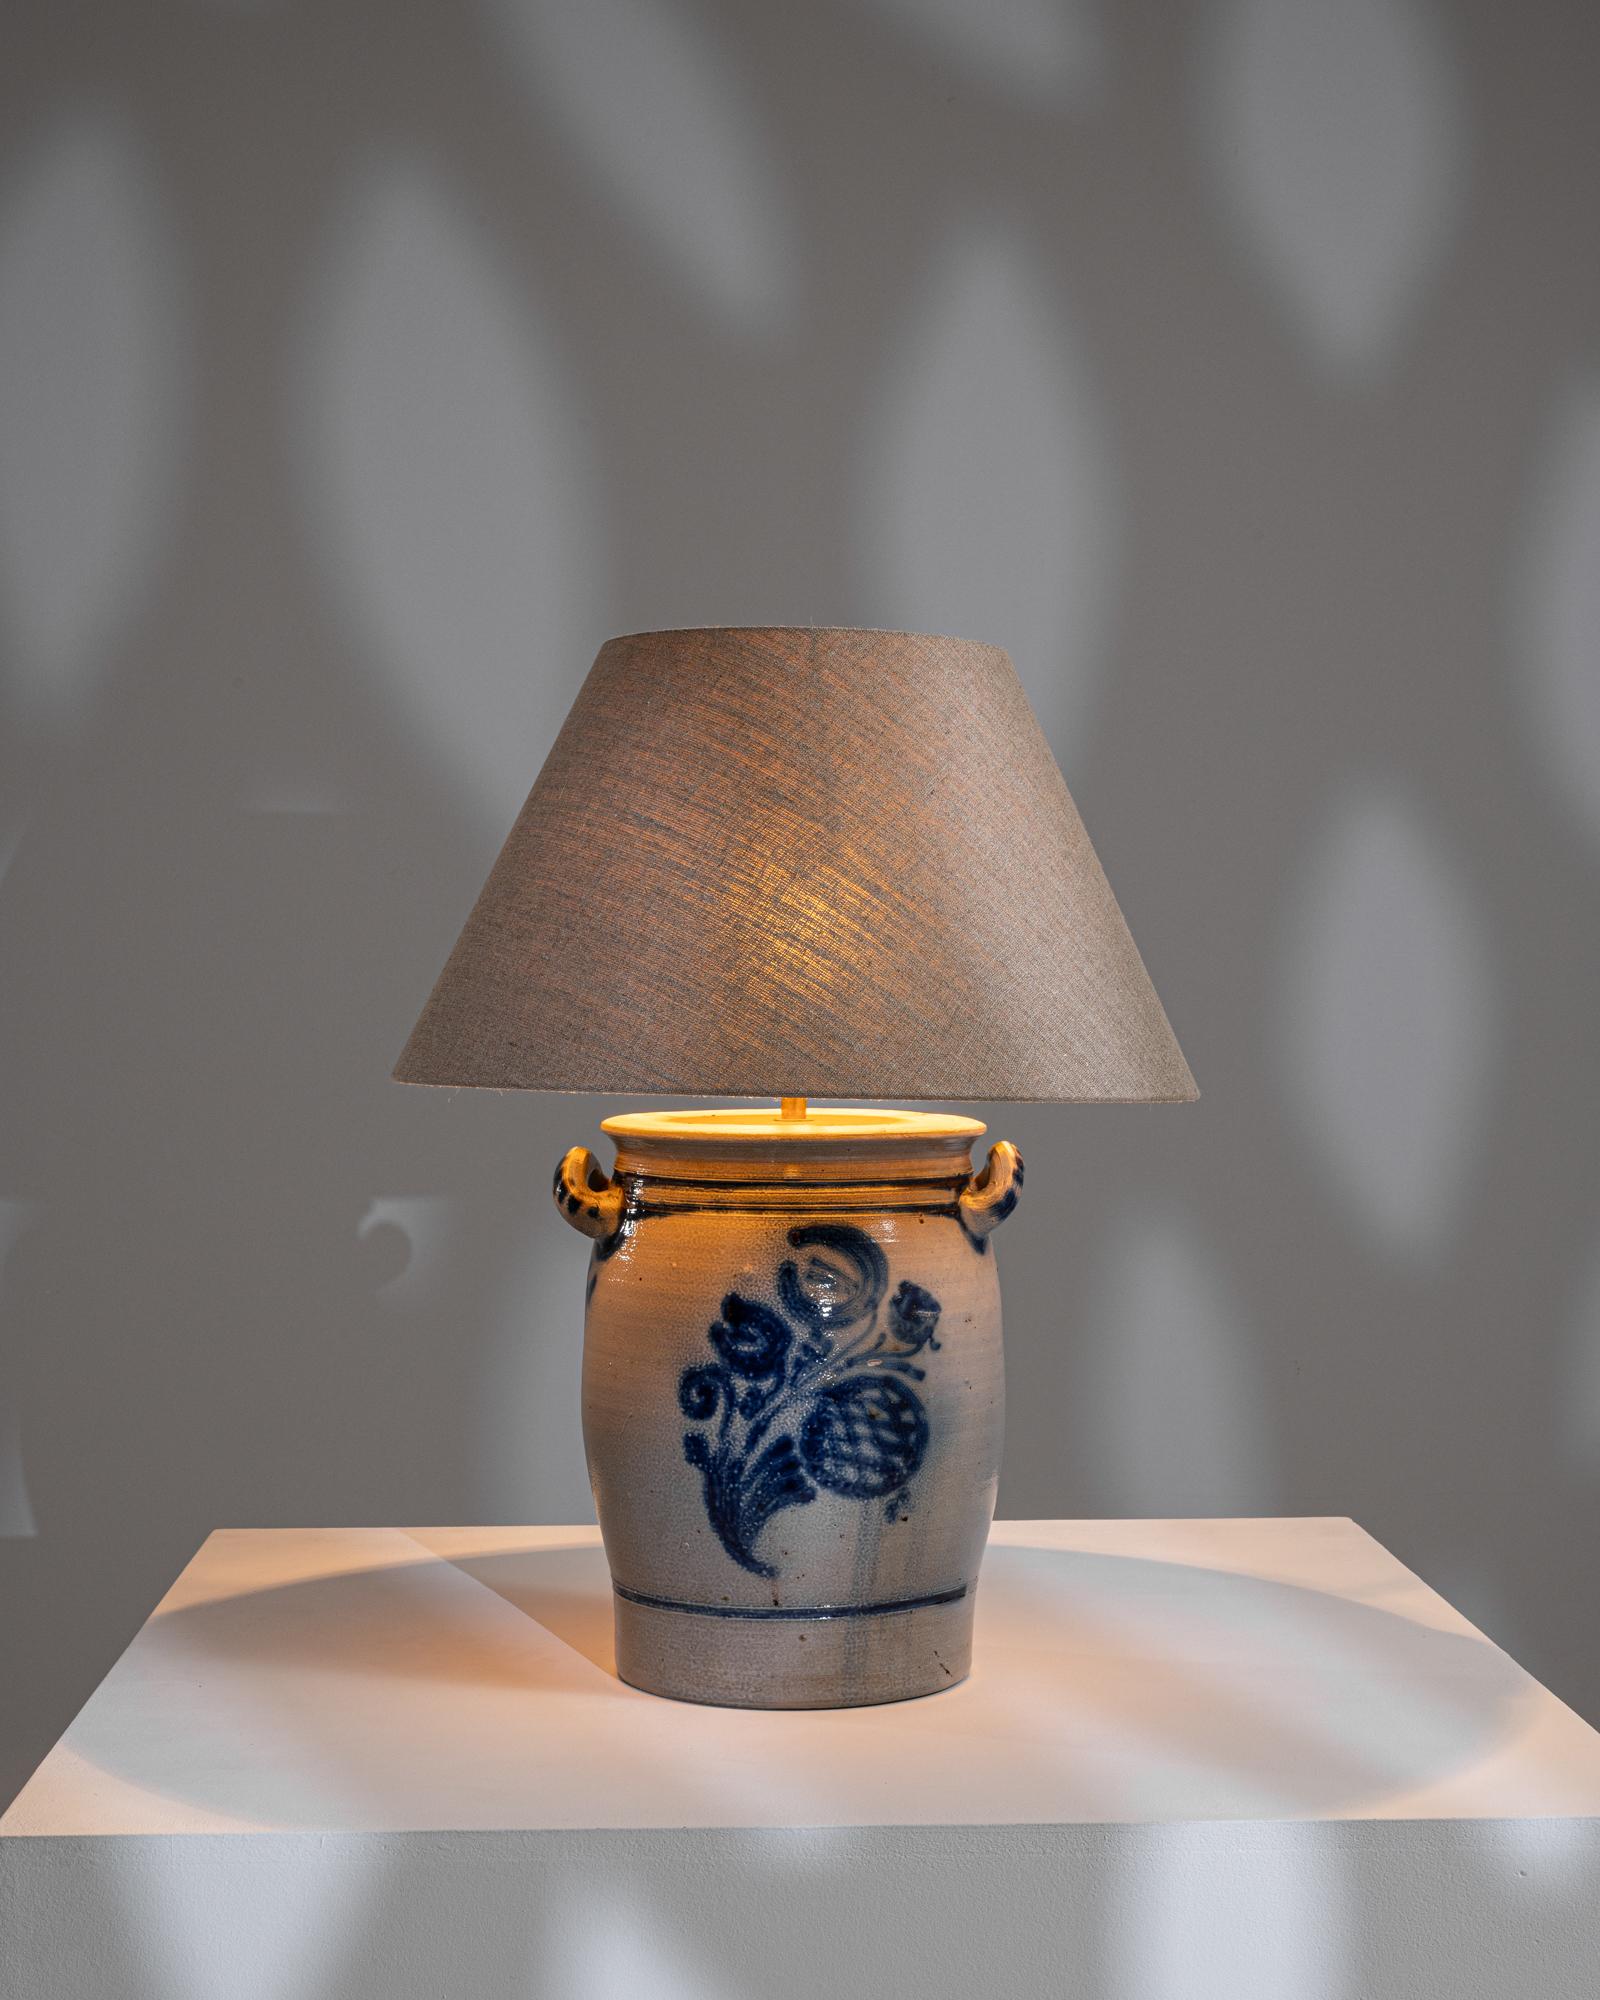 20th Century 1900s Belgian Ceramic Table Lamp For Sale